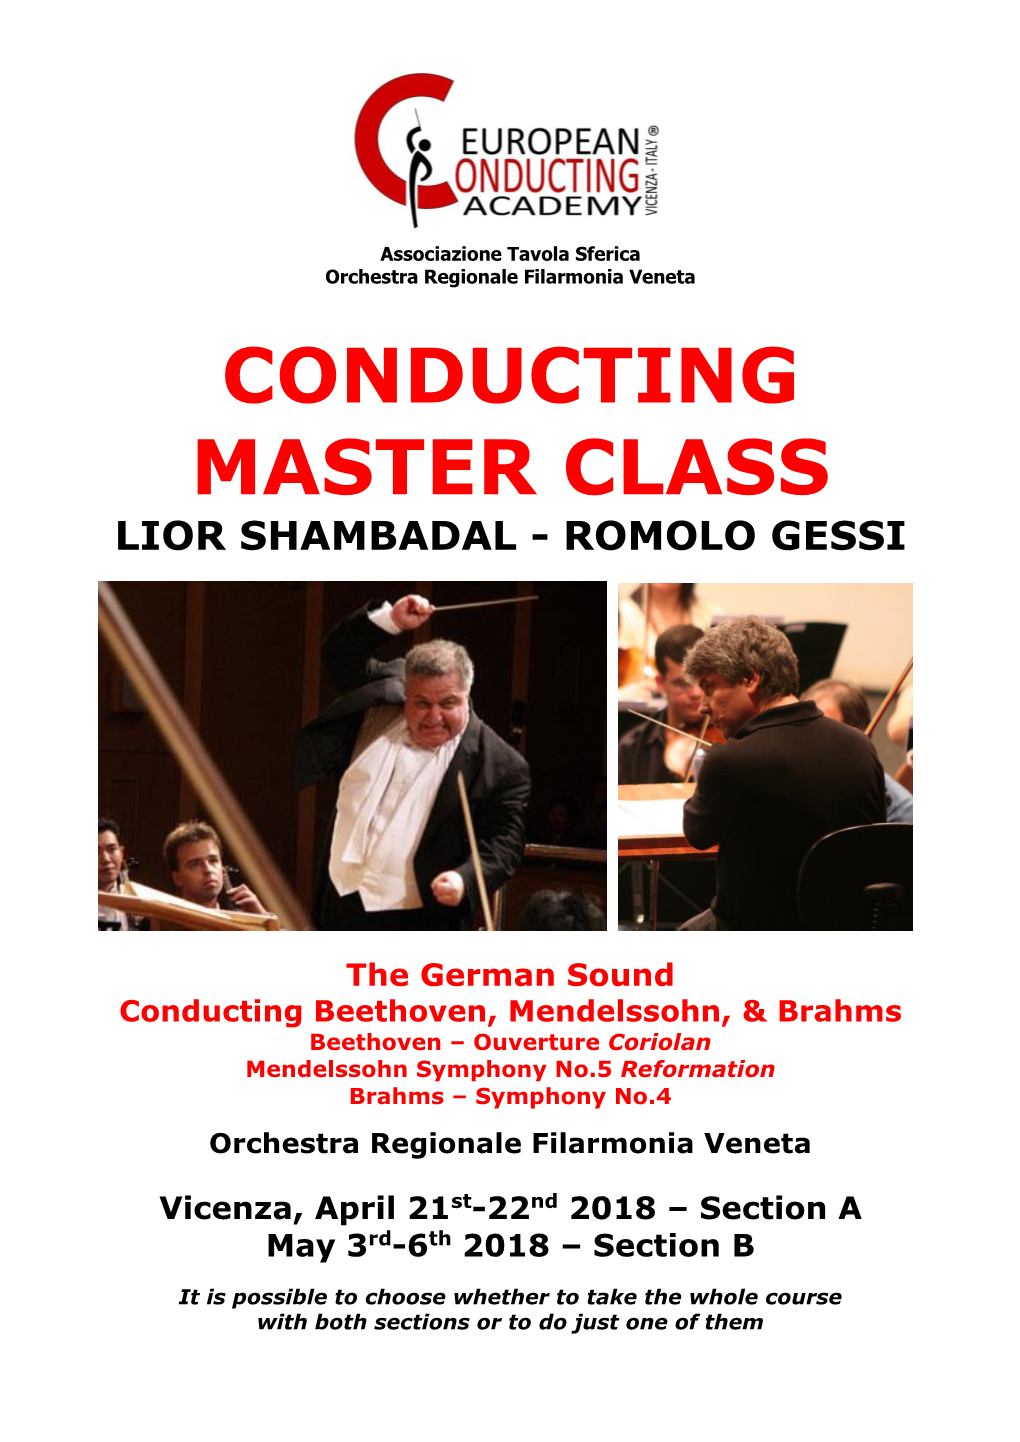 Conducting Master Class Lior Shambadal - Romolo Gessi